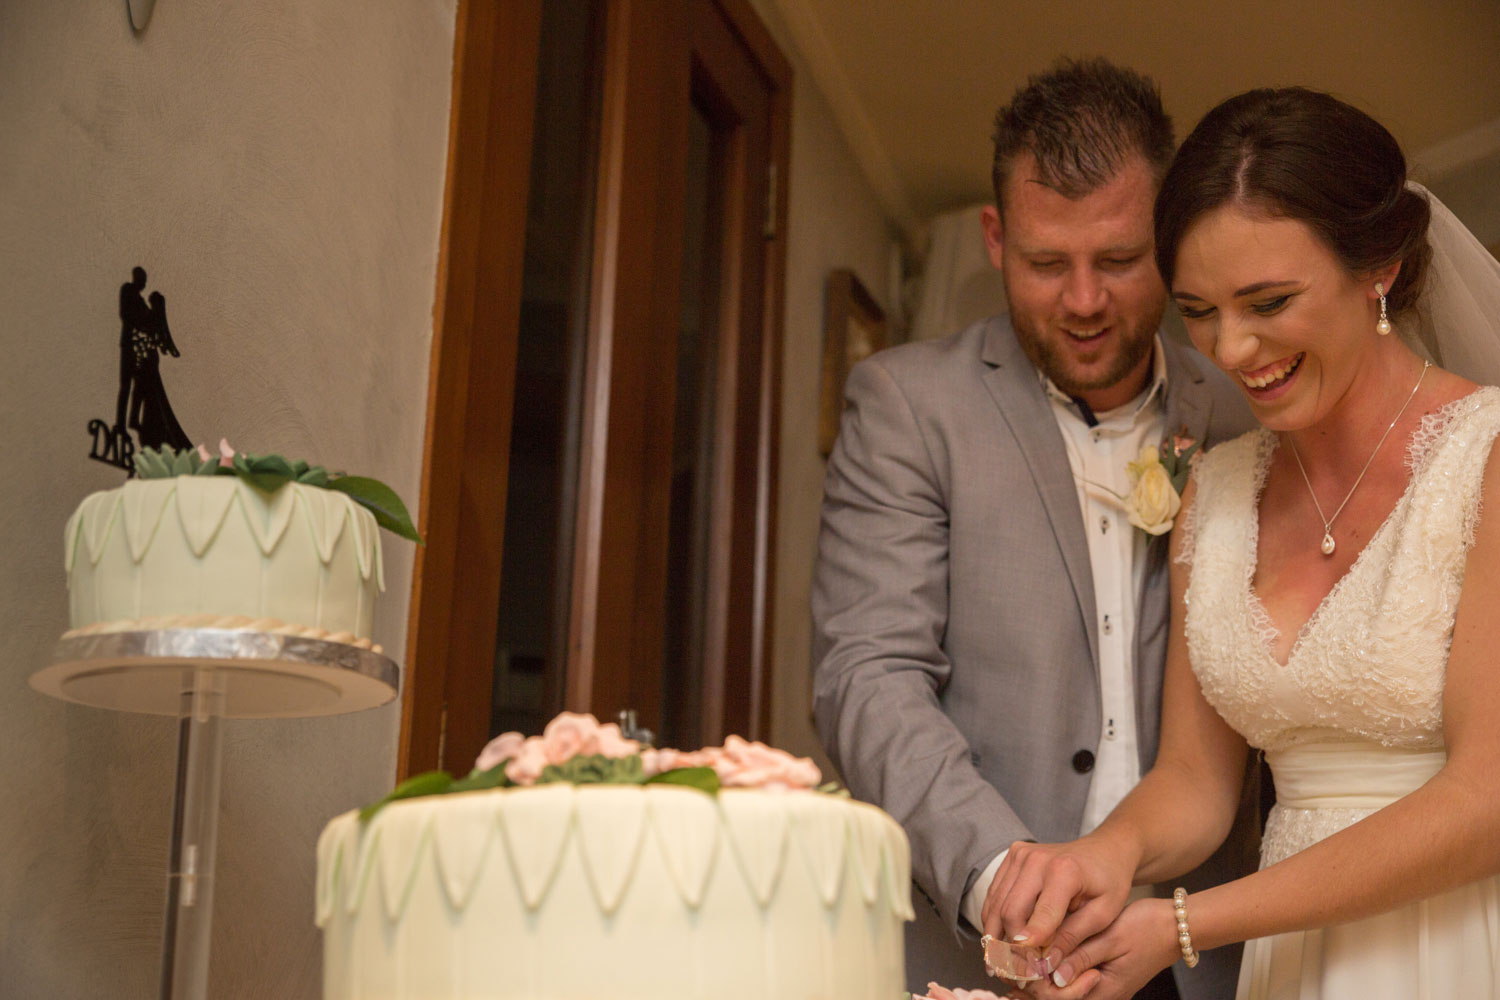 couple cutting cake at wedding reception